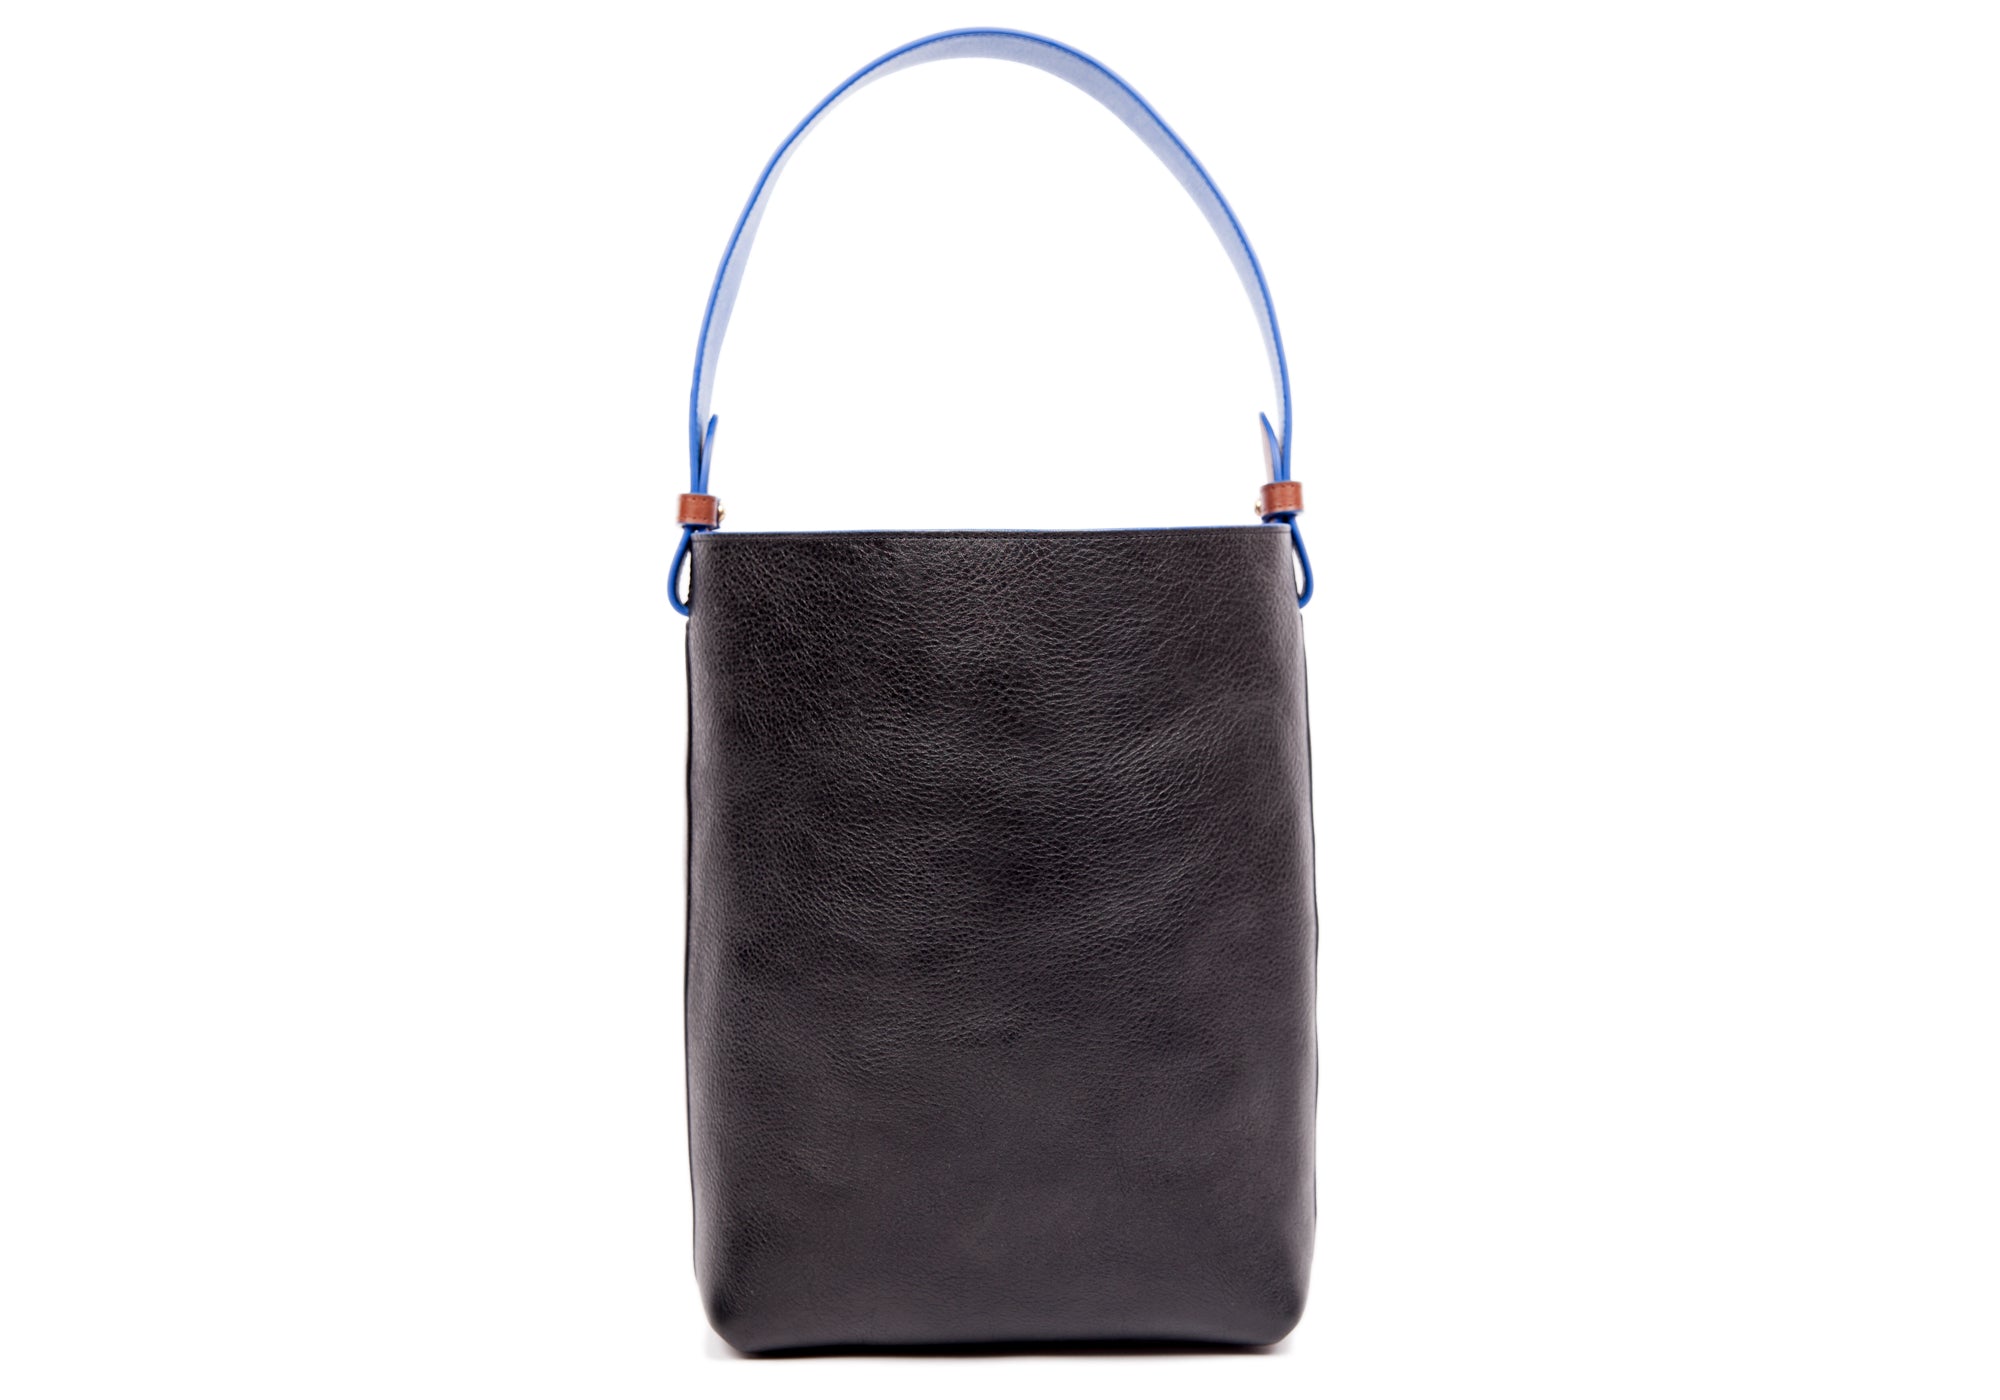 Celine Pre-owned Women's Leather Handbag - Grey - One Size